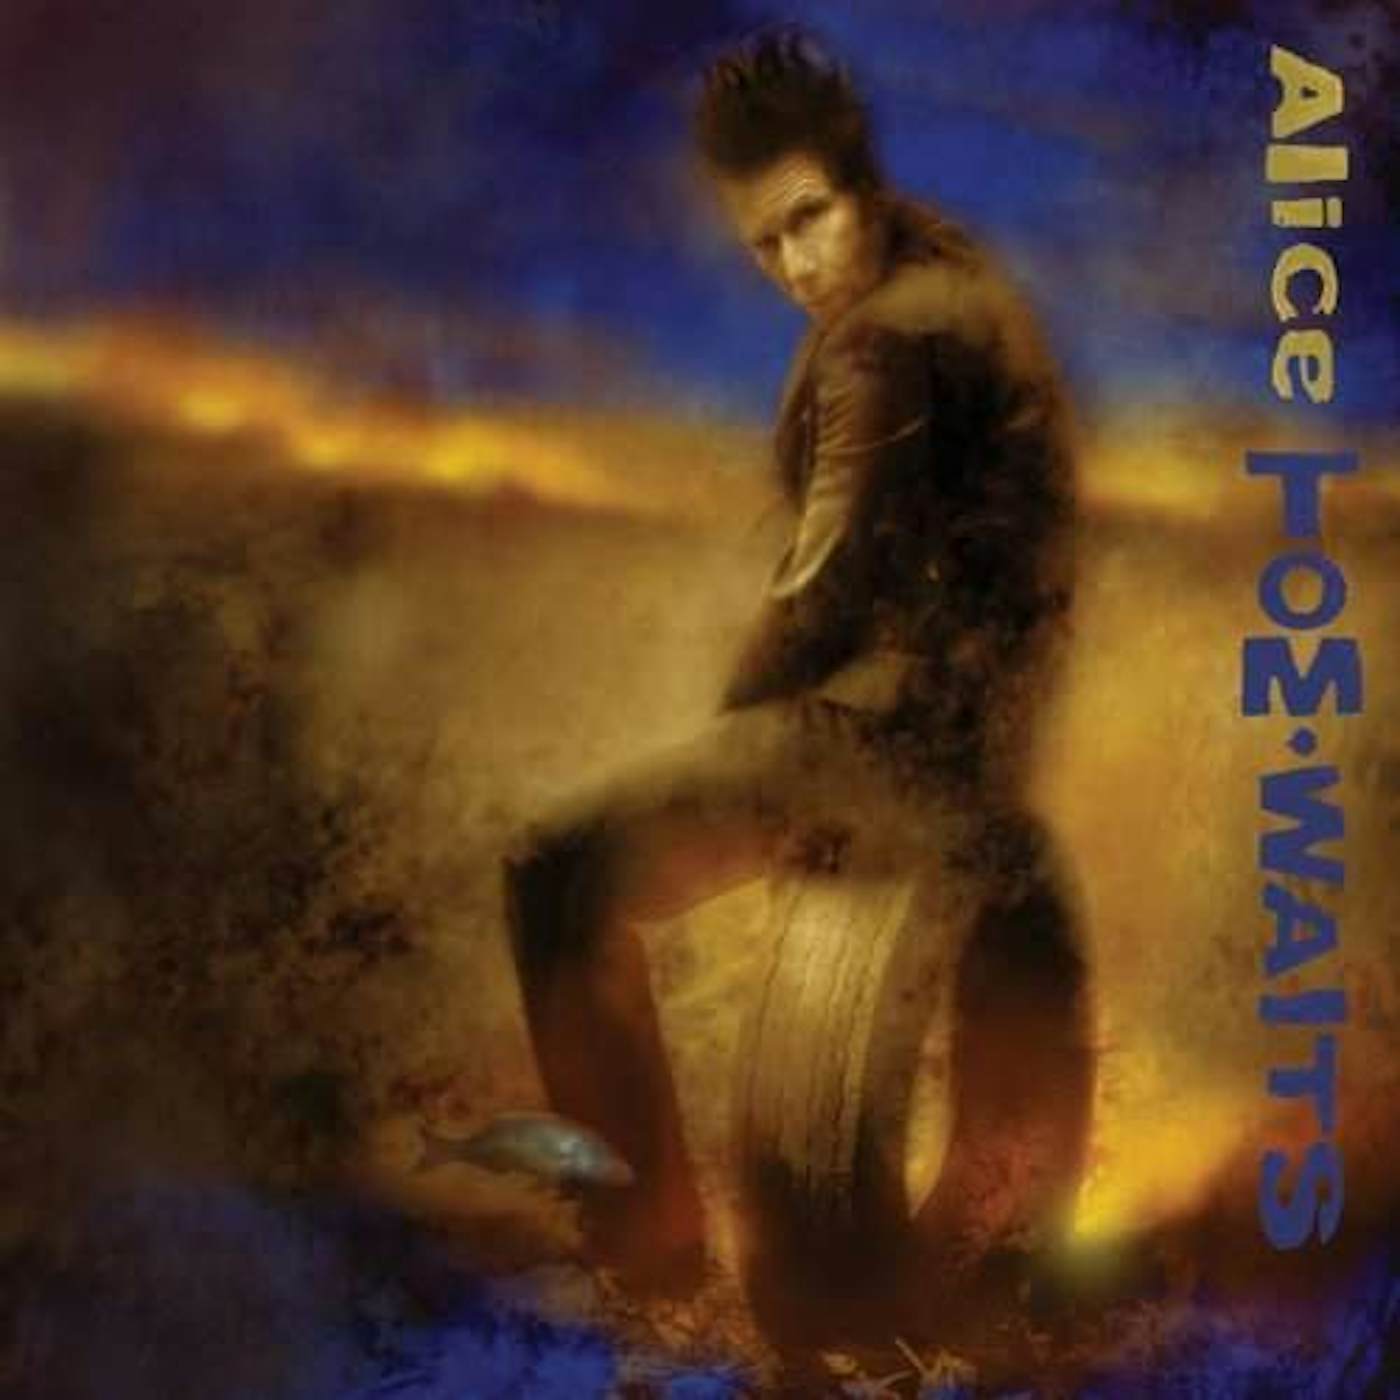 Tom Waits ALICE (ANNIVERSARY ED.) (METALLIC GOLD) Vinyl Record